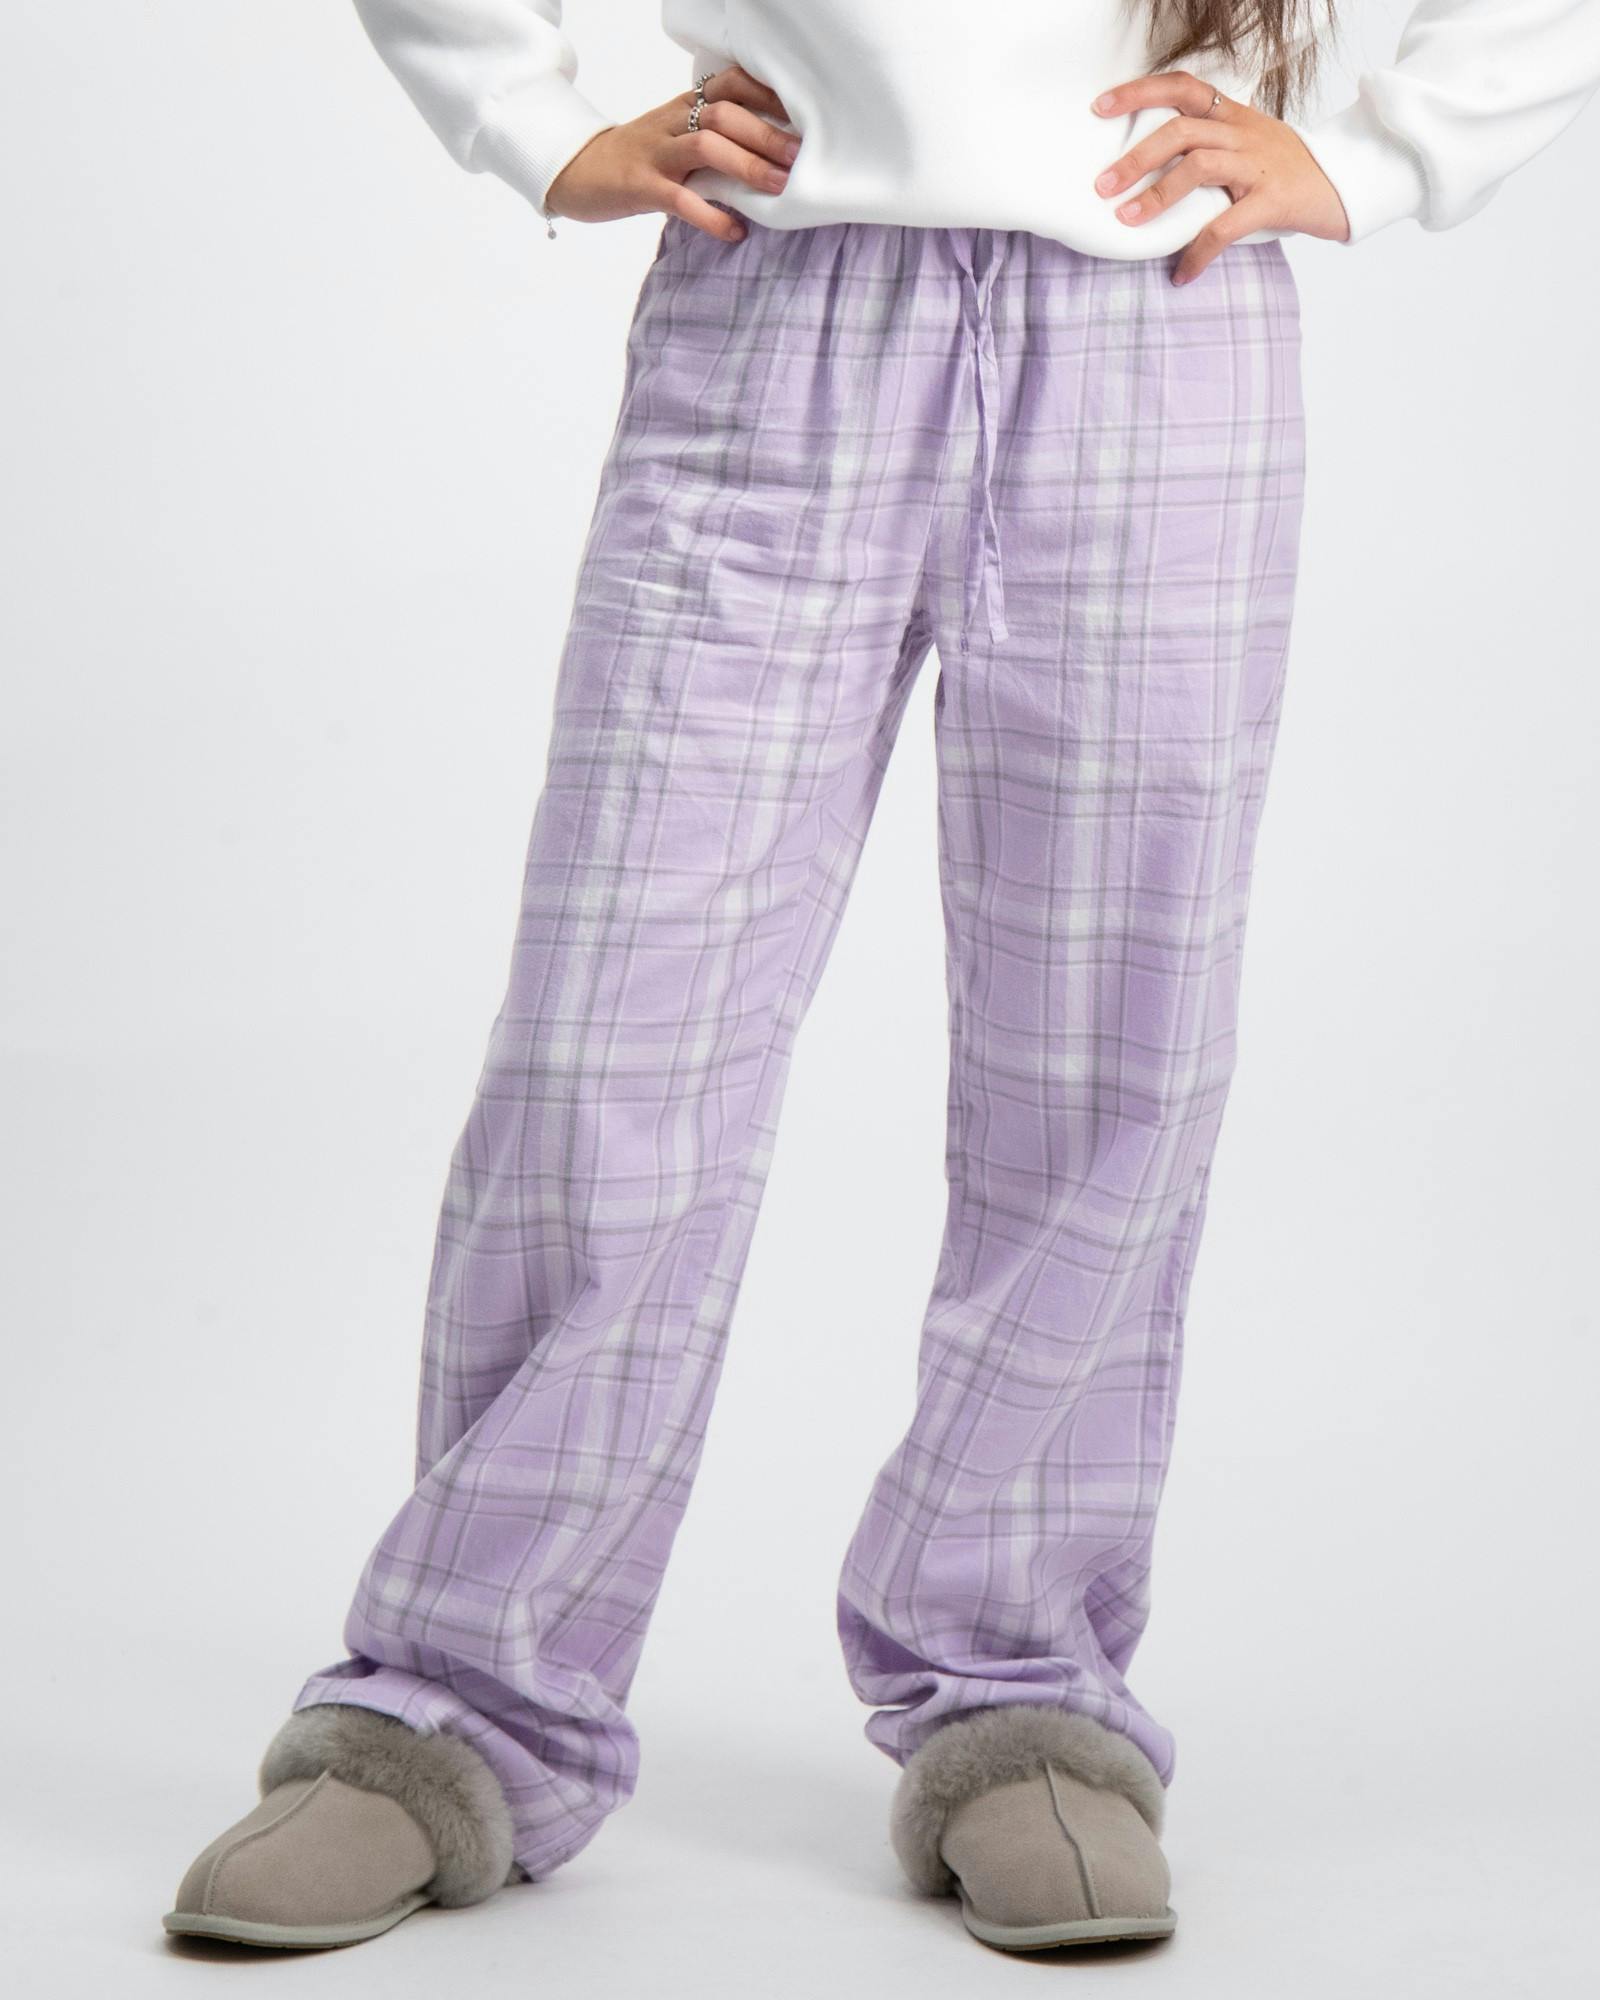 Y flannel pyjama trousers